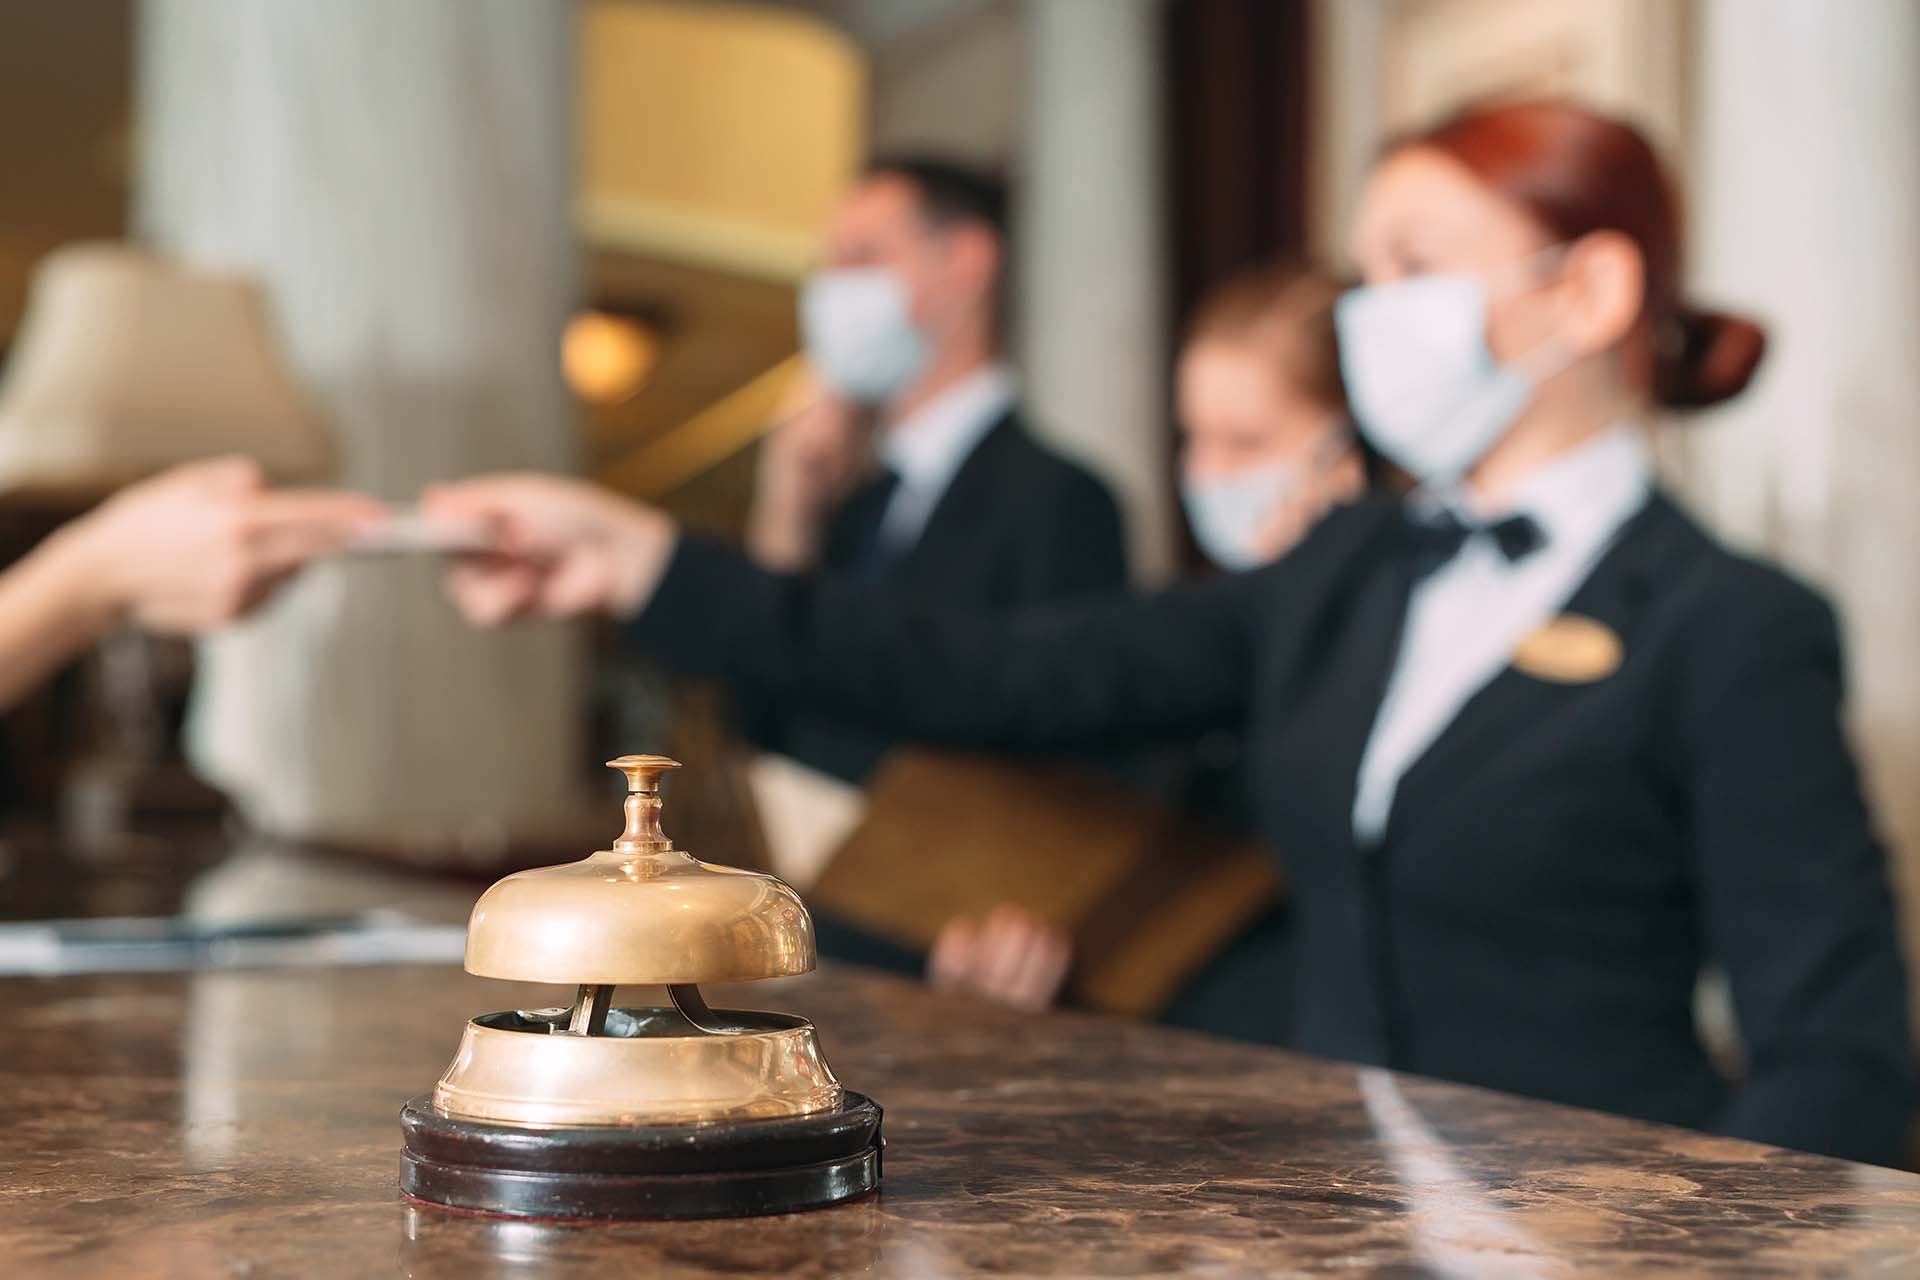 Hotel employee COVID safety protocols